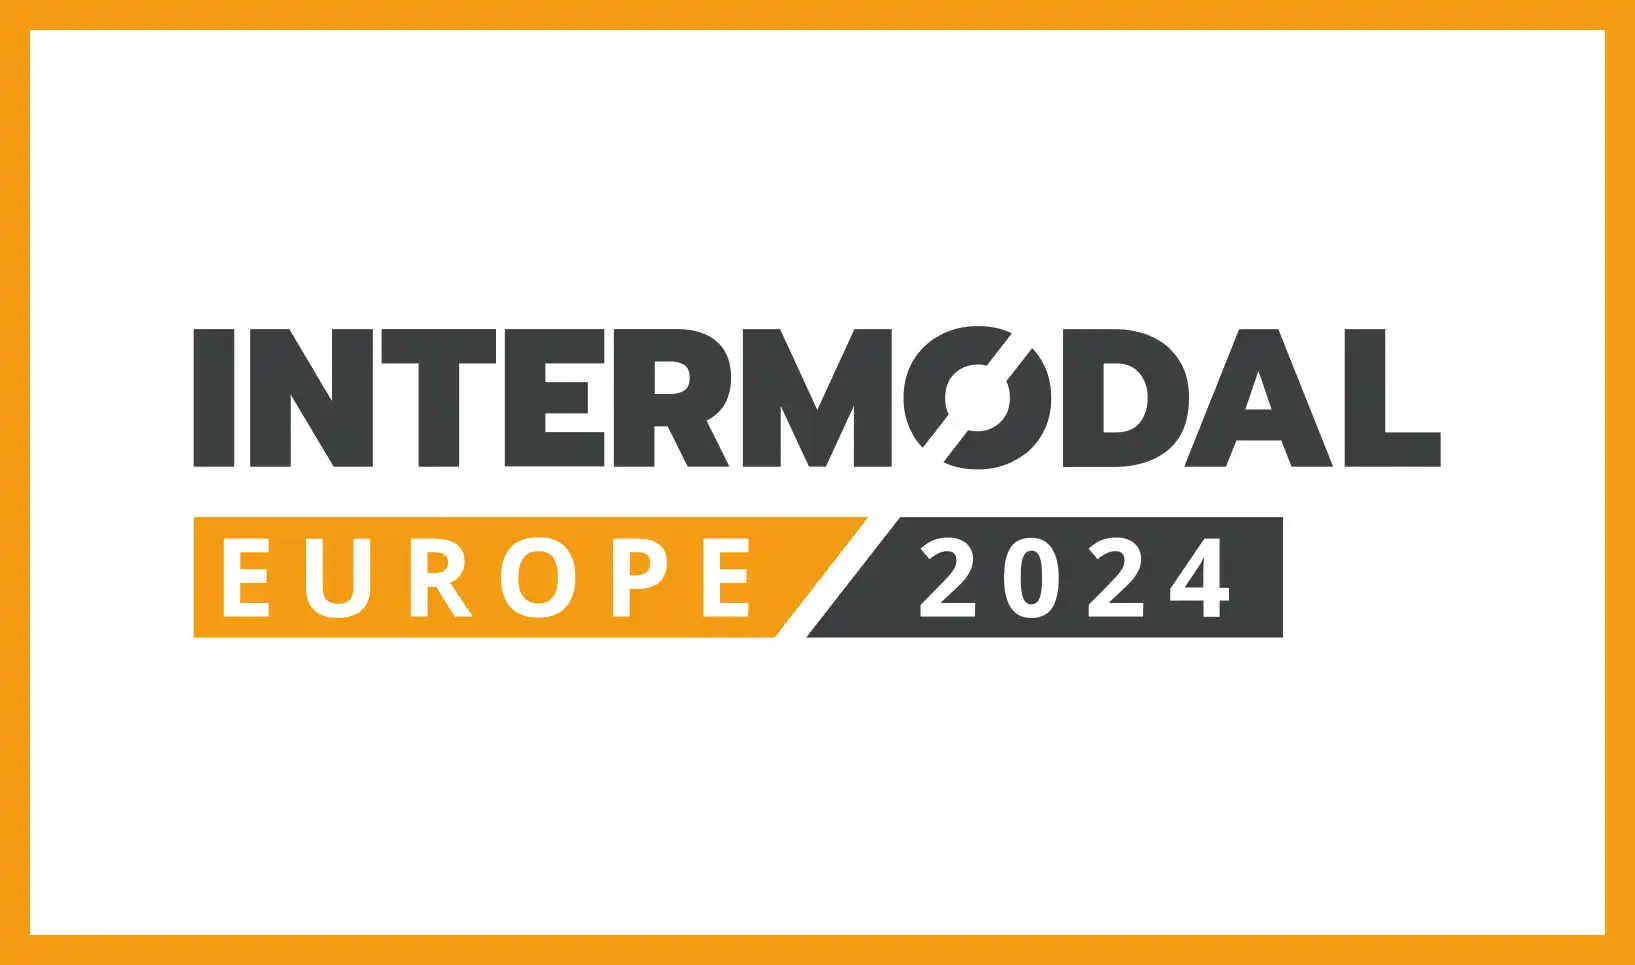 Intermodal Europe